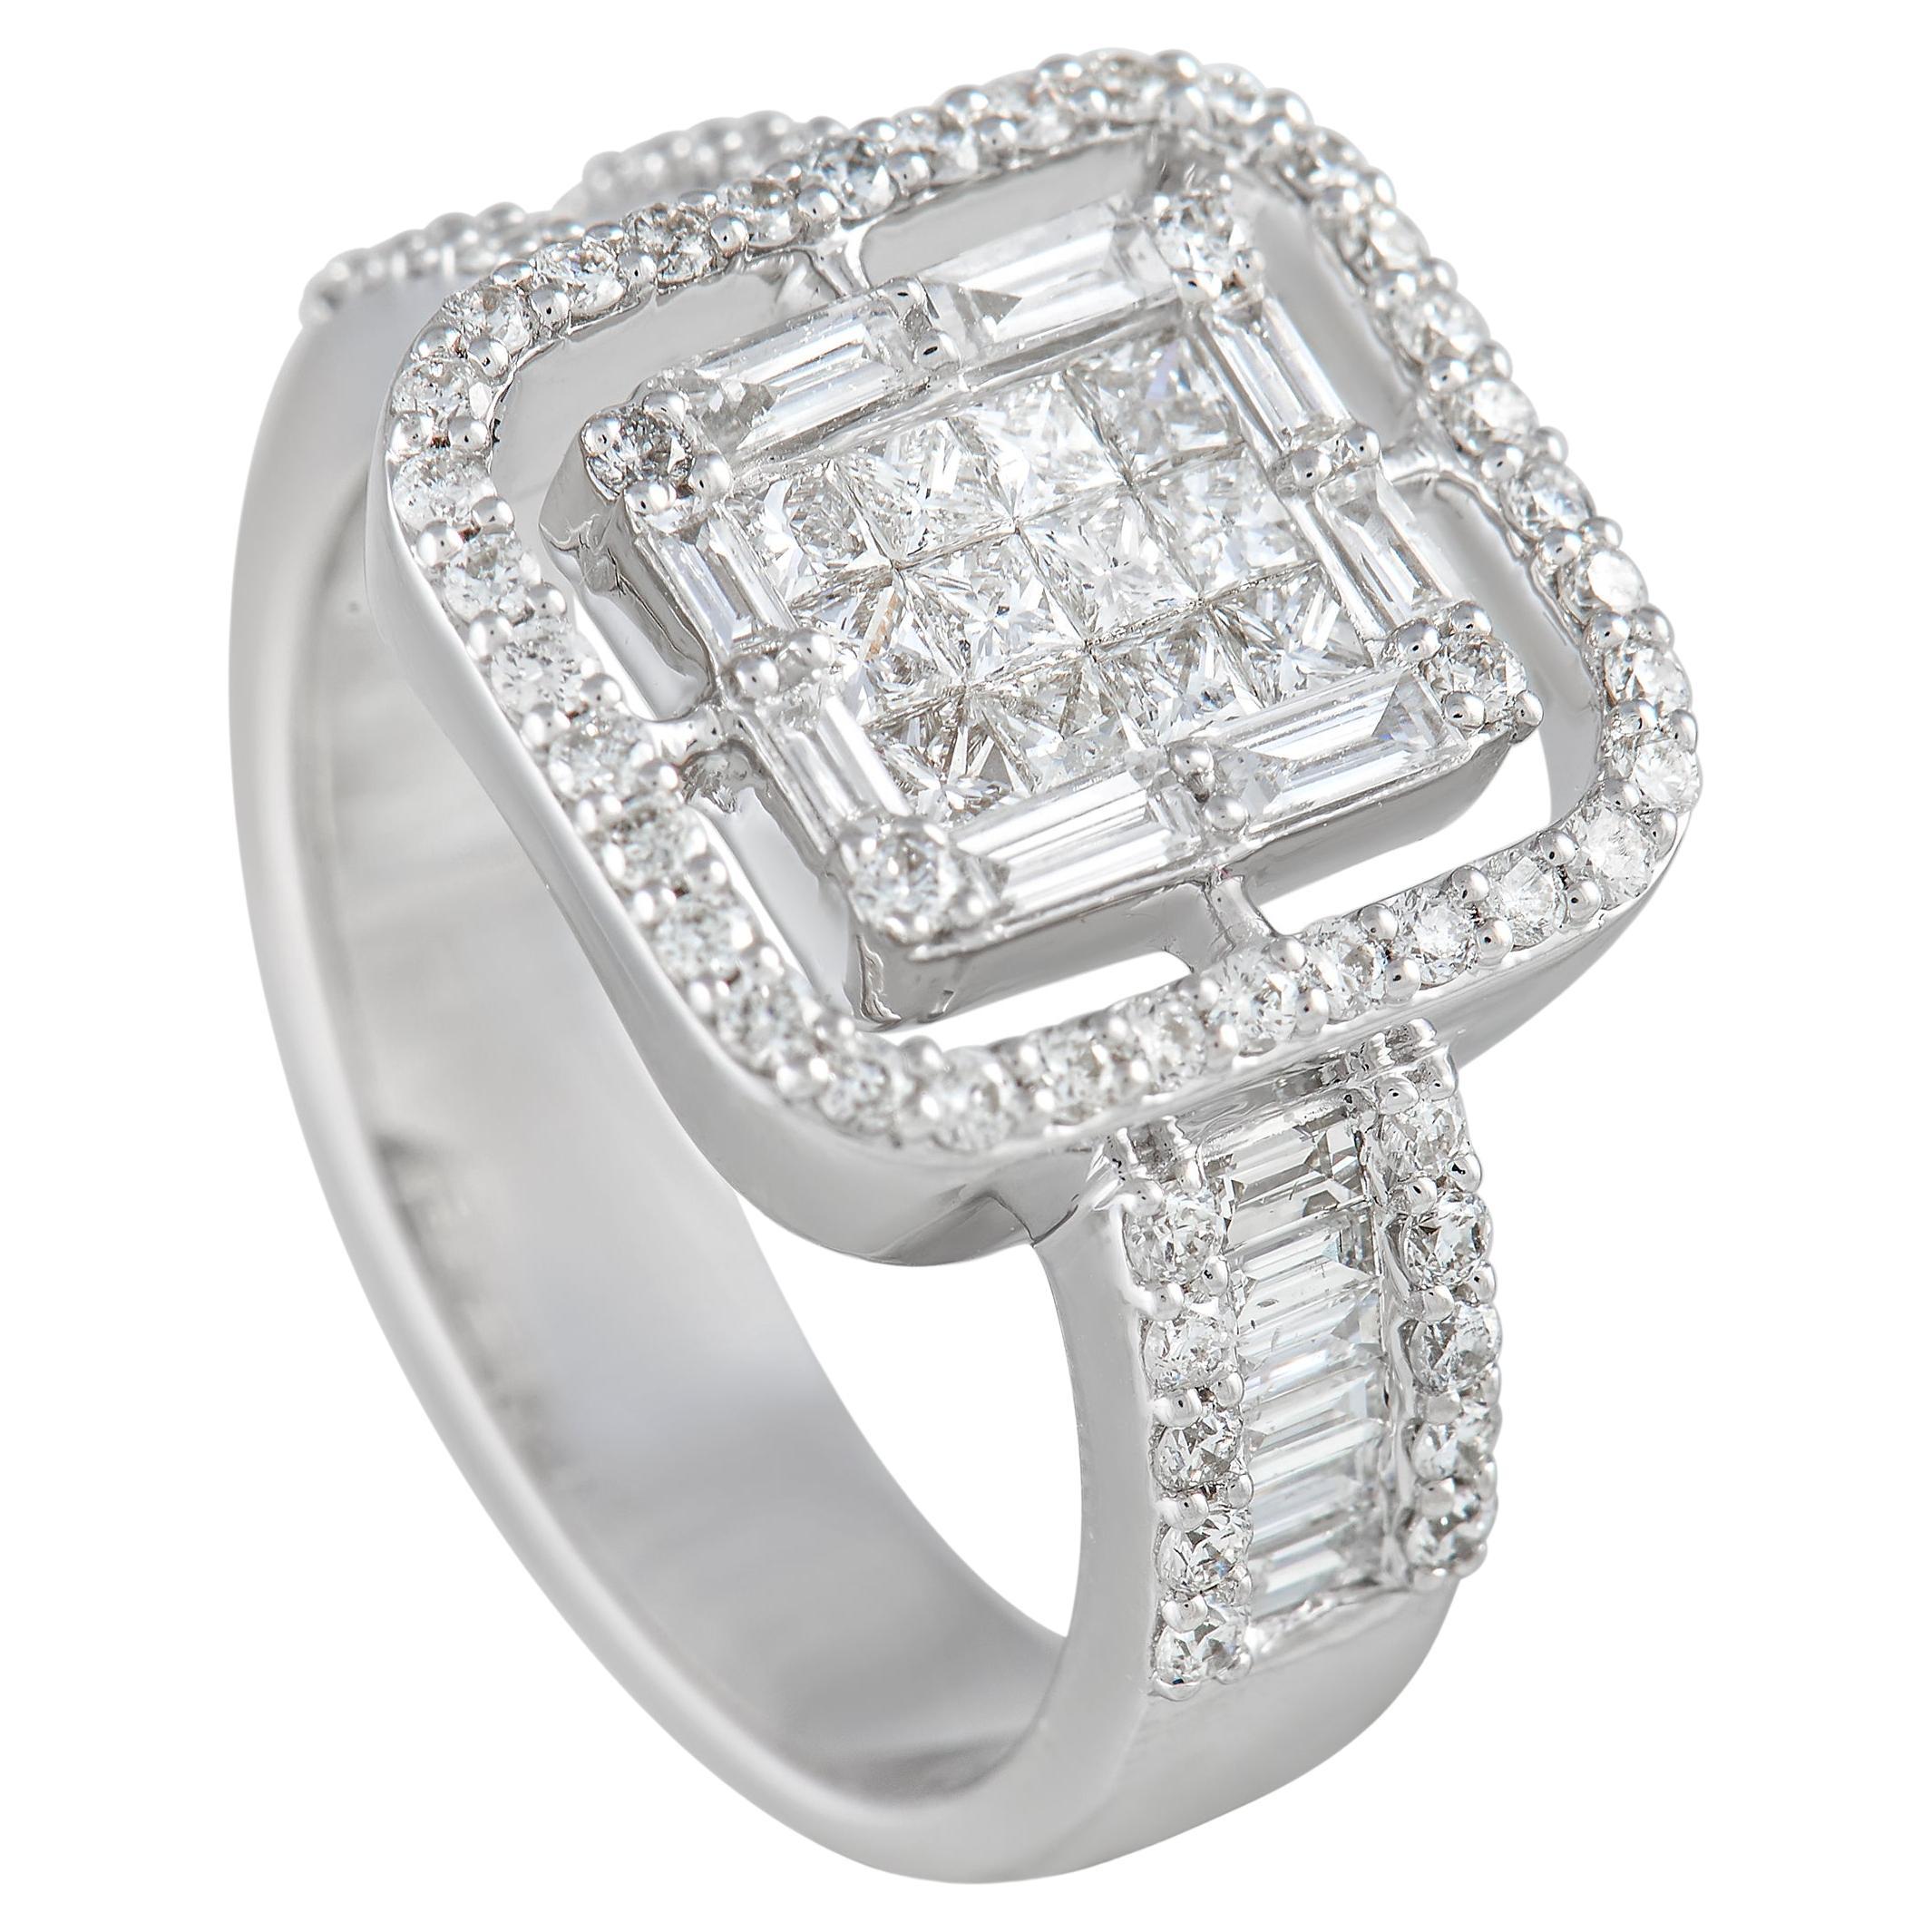 LB Exclusive 14K White Gold 1.28 ct Diamond Ring